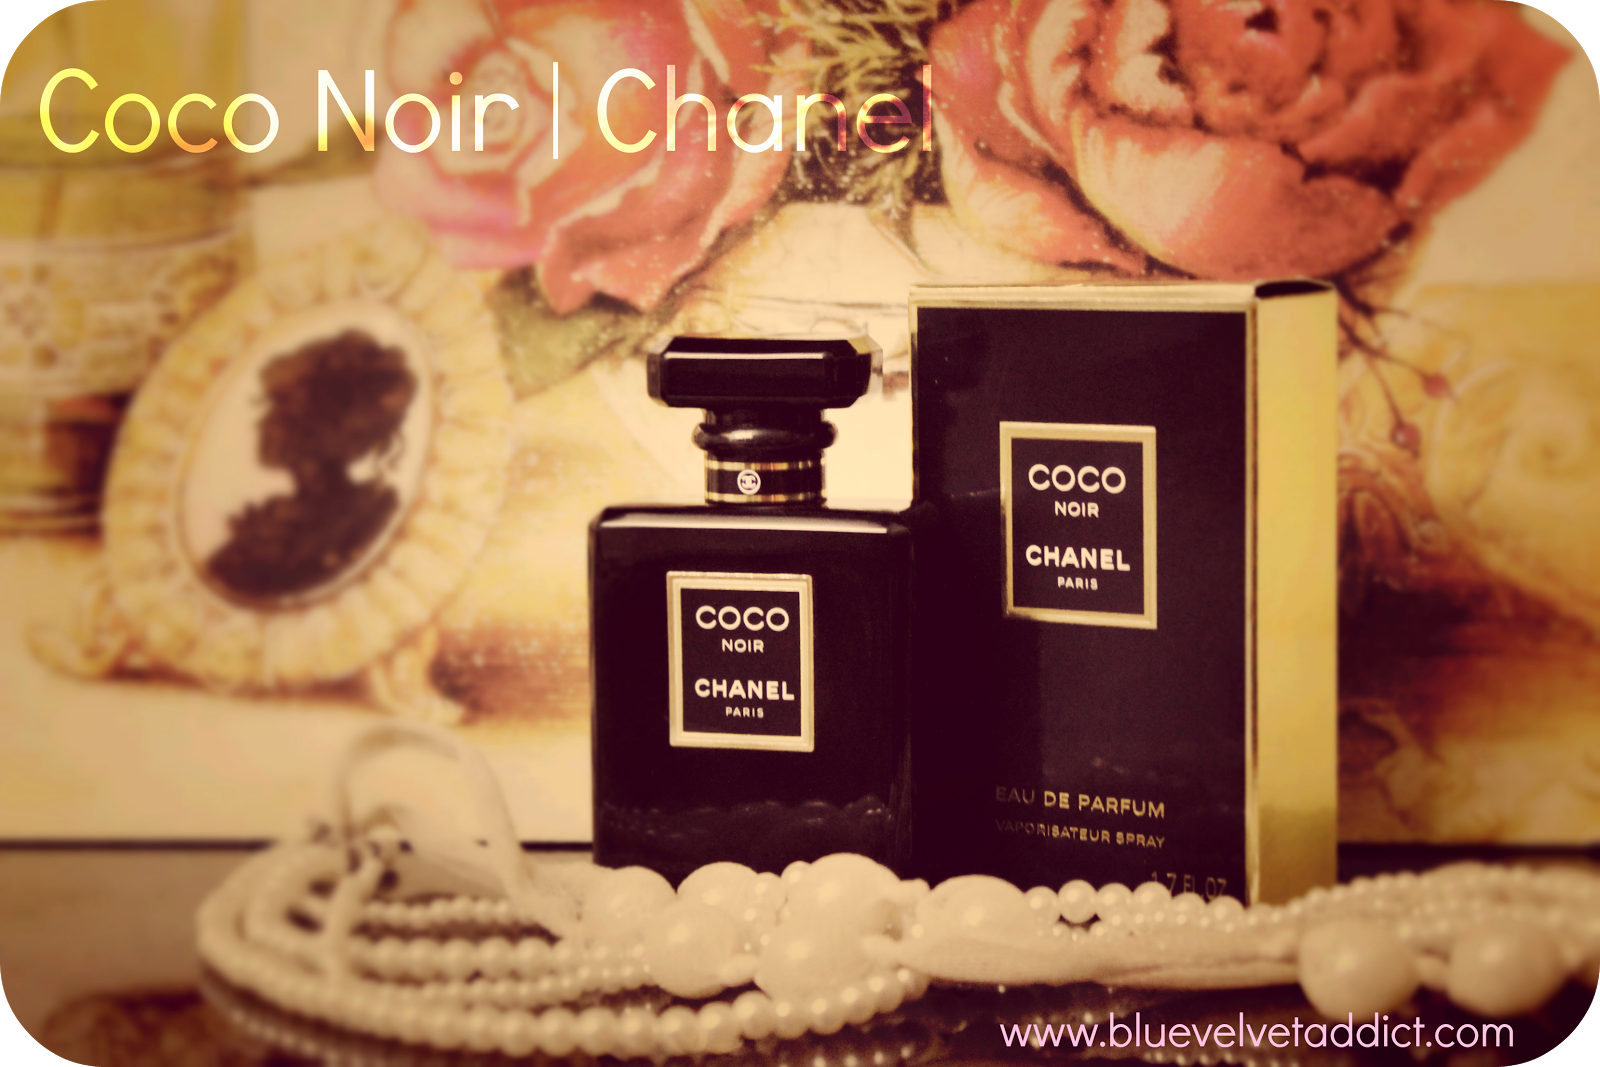 Through Black Light Revealed, Chanel Coco Noir